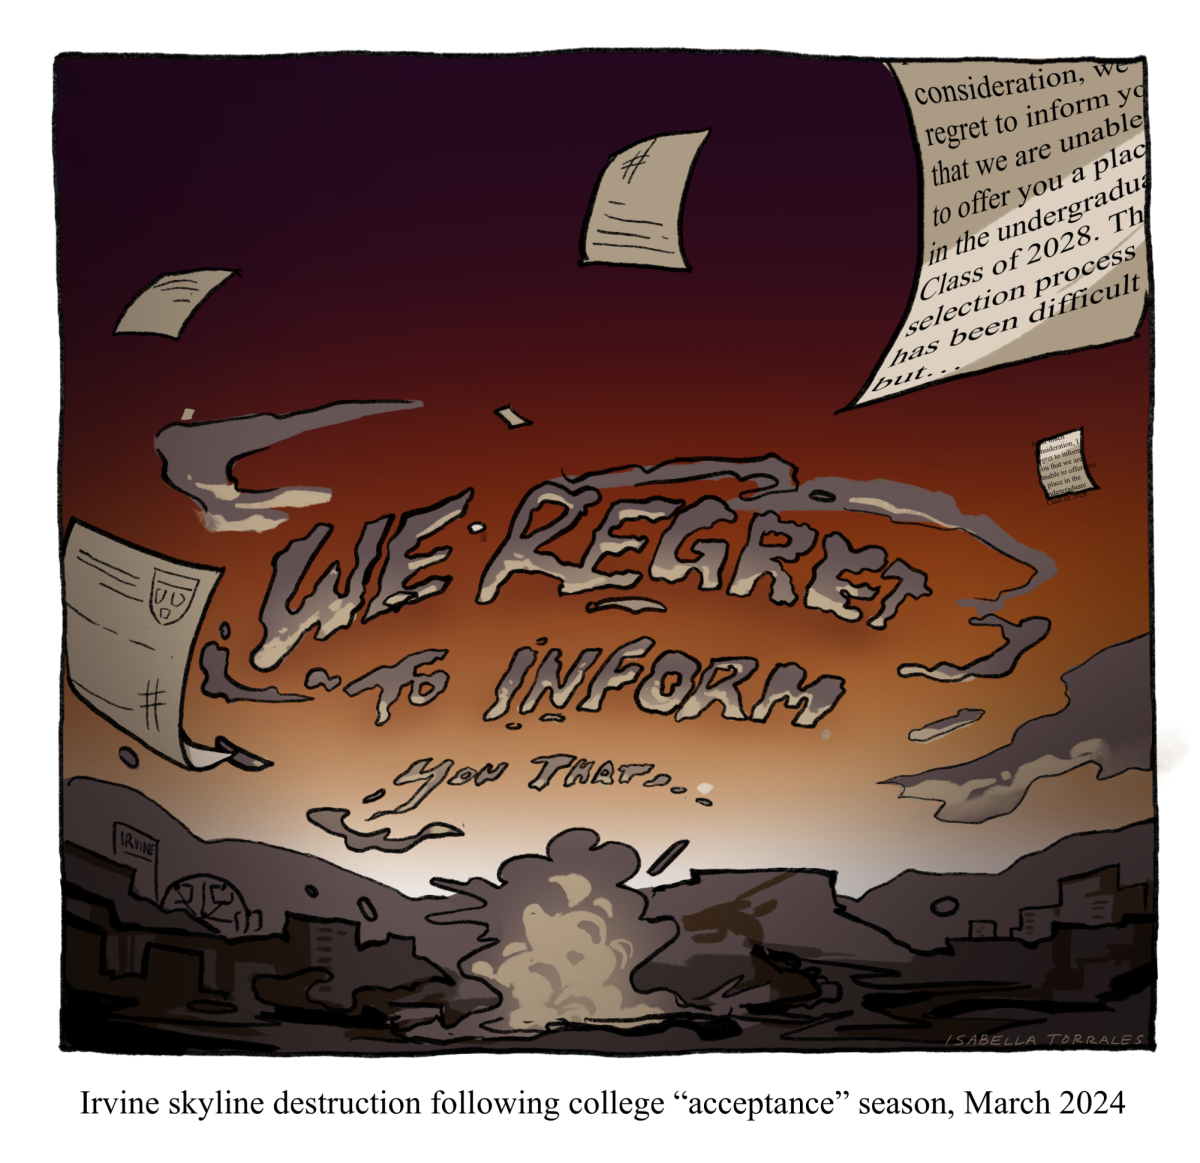 Political Cartoon: College Application Season Comes to a Close